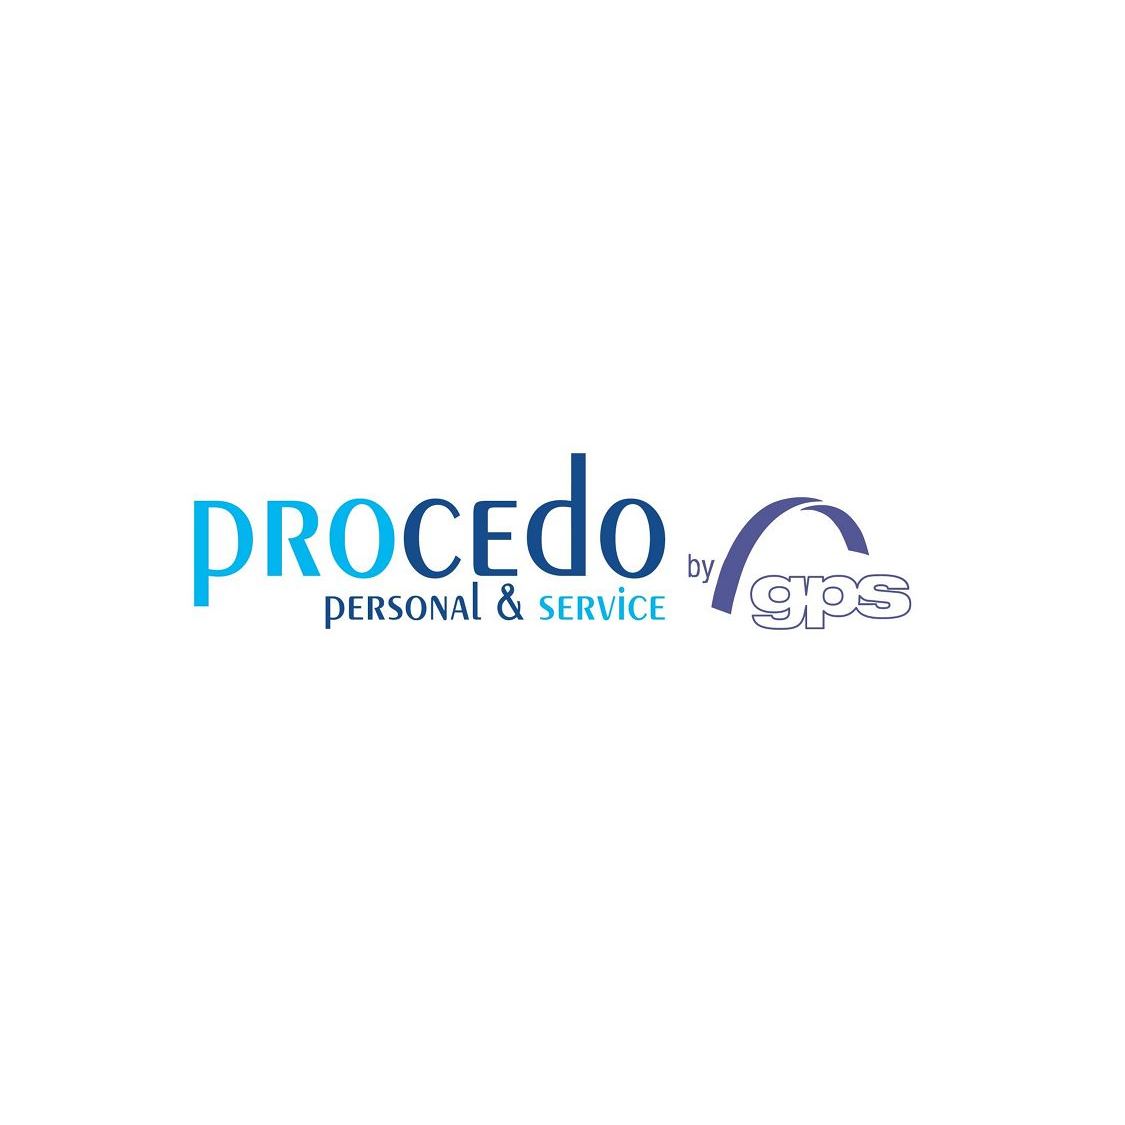 Logo procedo by gps GmbH